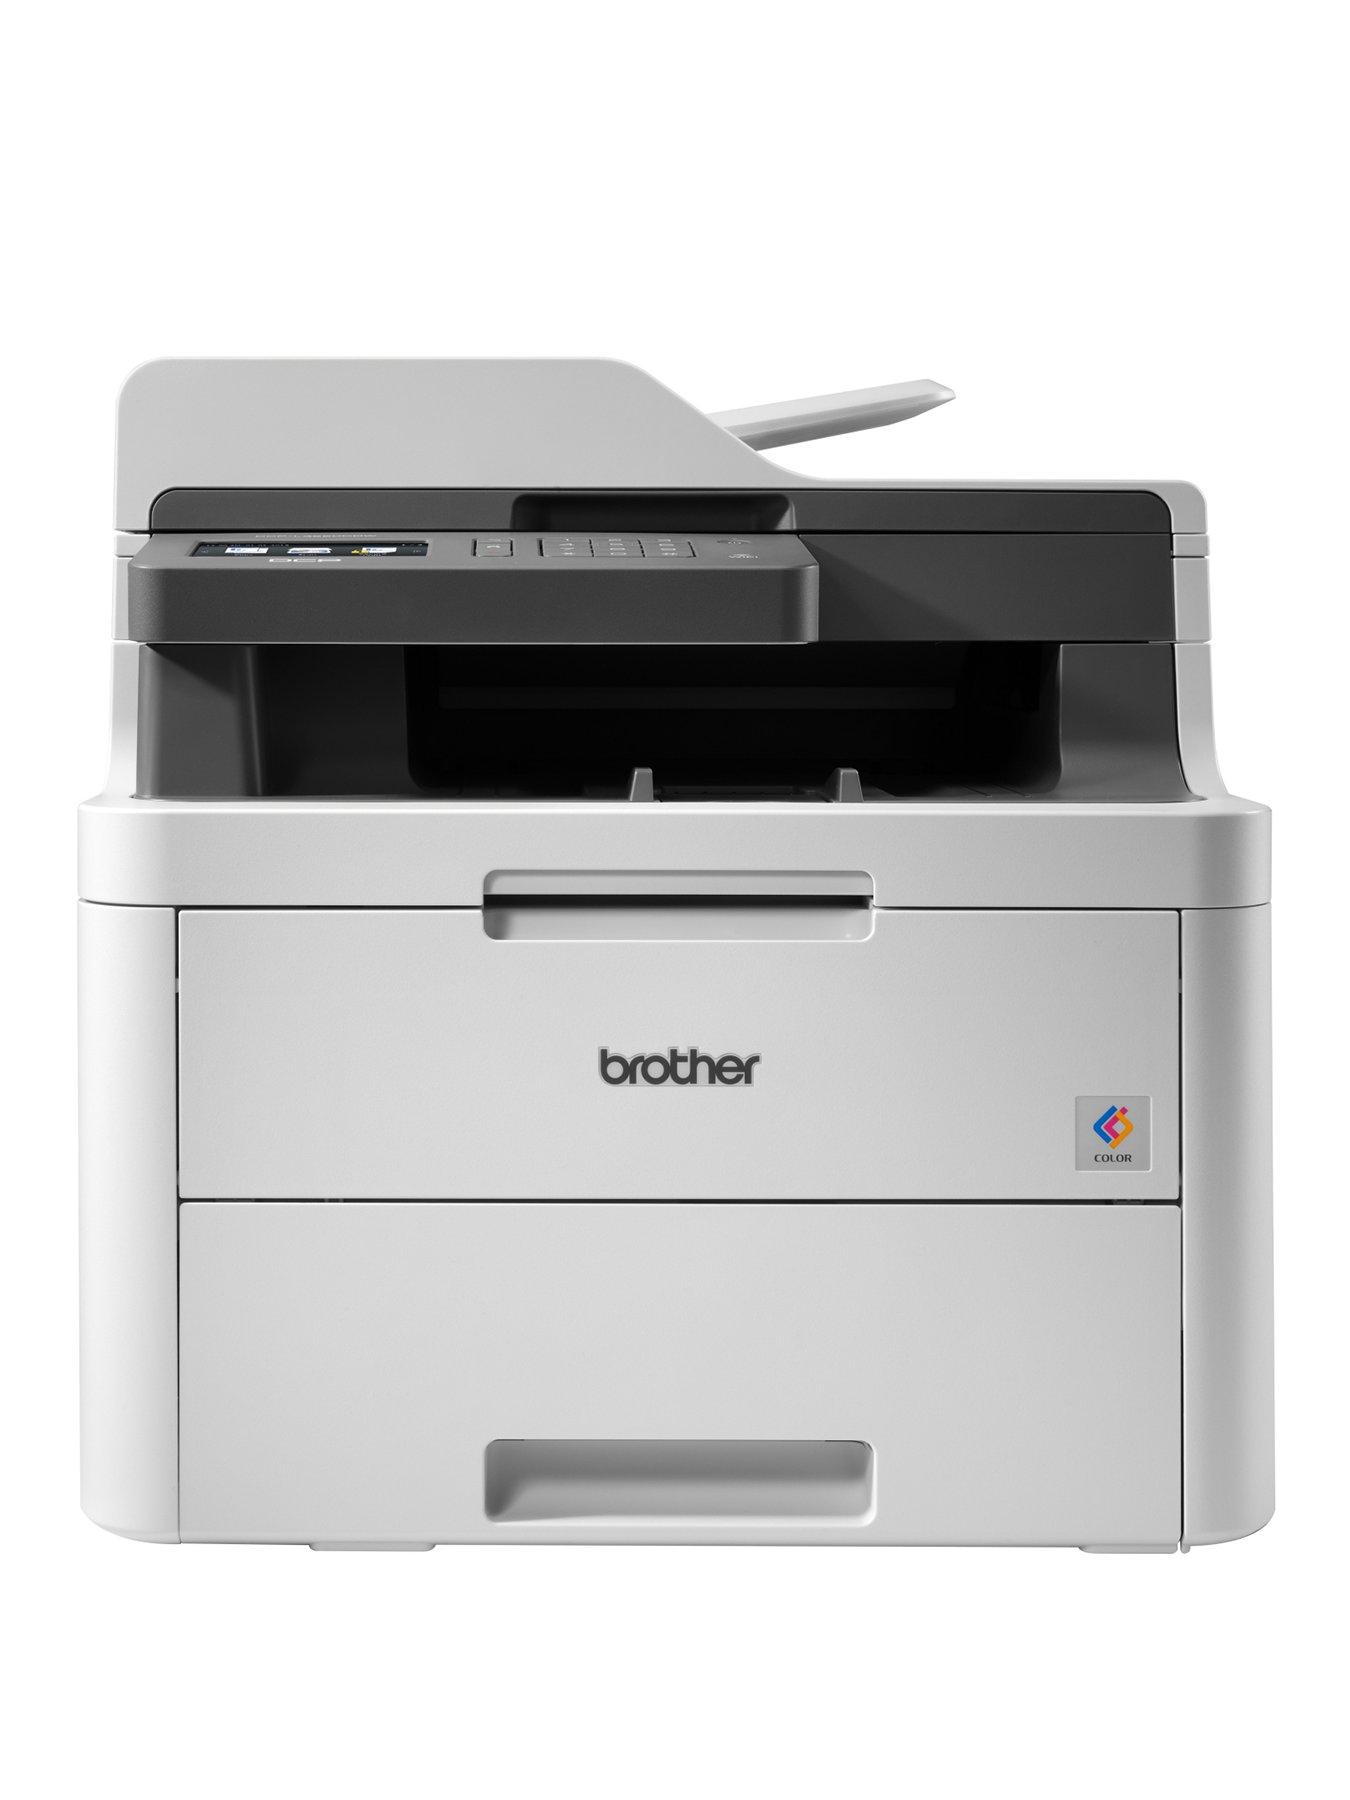 Brother DCP-L3550CDW 3 in 1 Colour Laser Printer DCPL3550CDWZU1